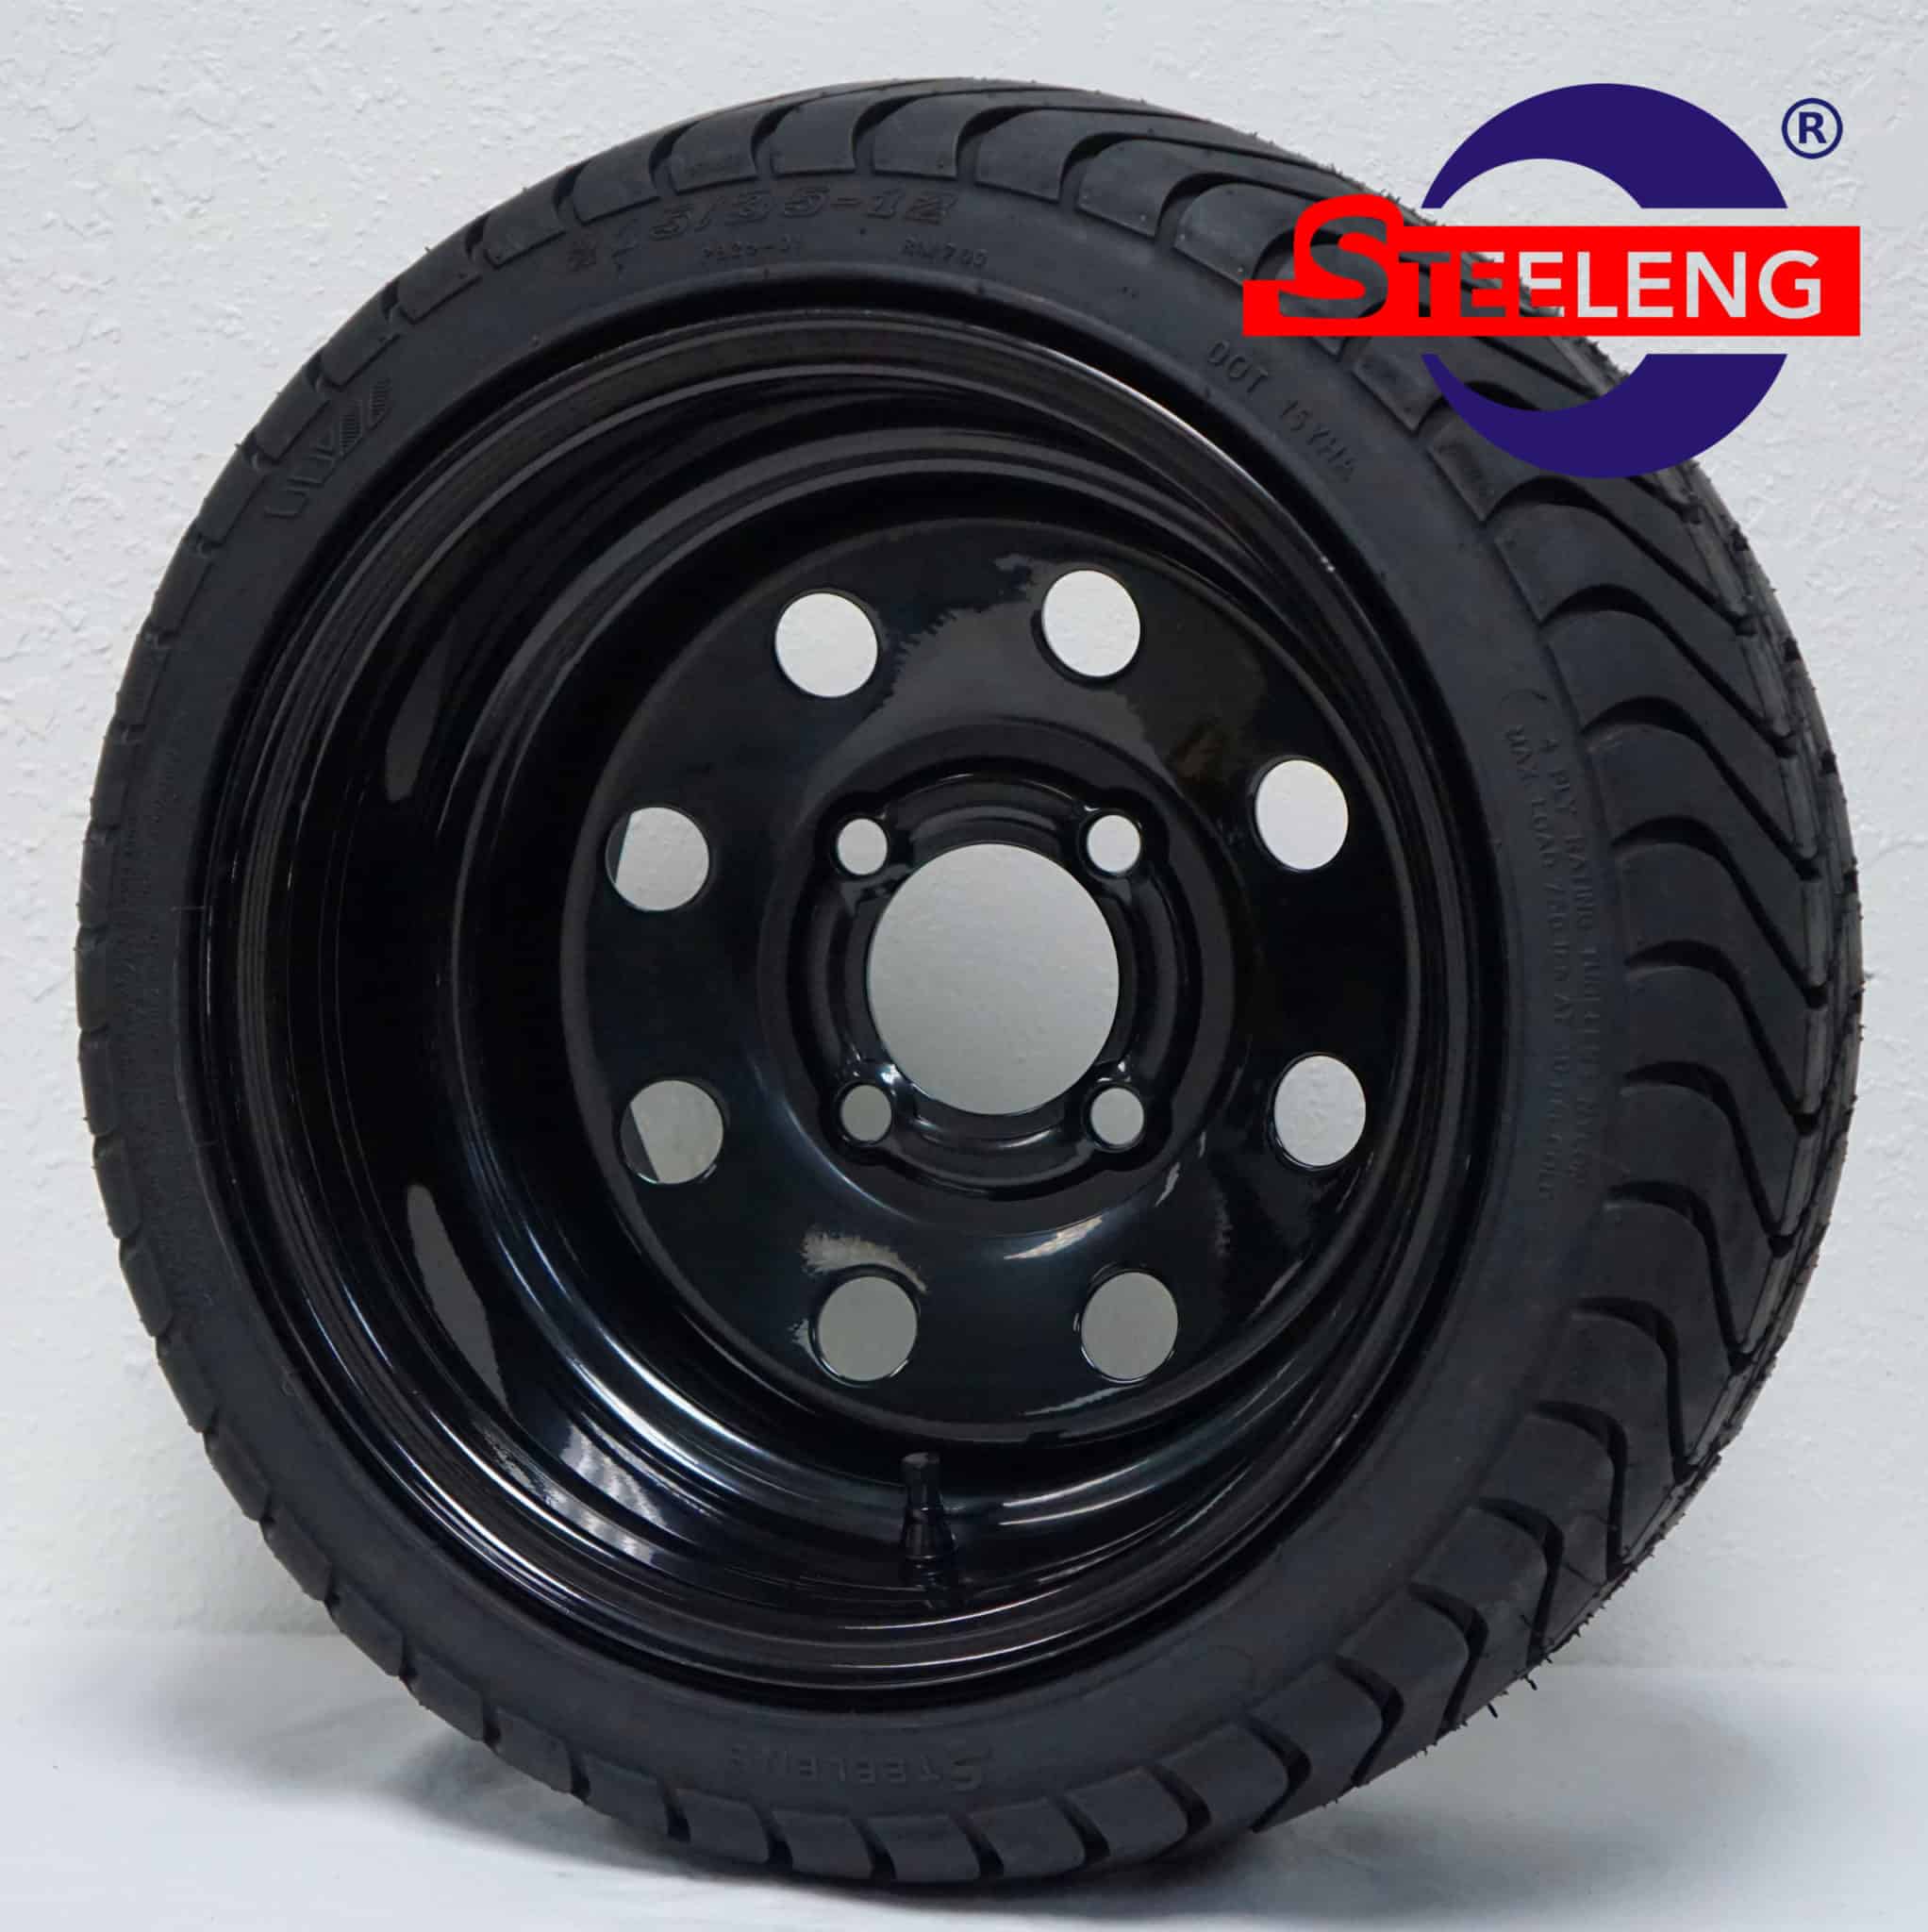 BNDL-SW1202-TR1212 12"x7" Steel Wheel Black 8 Holes & 215/35-12 Low Profile Tire Set of 4